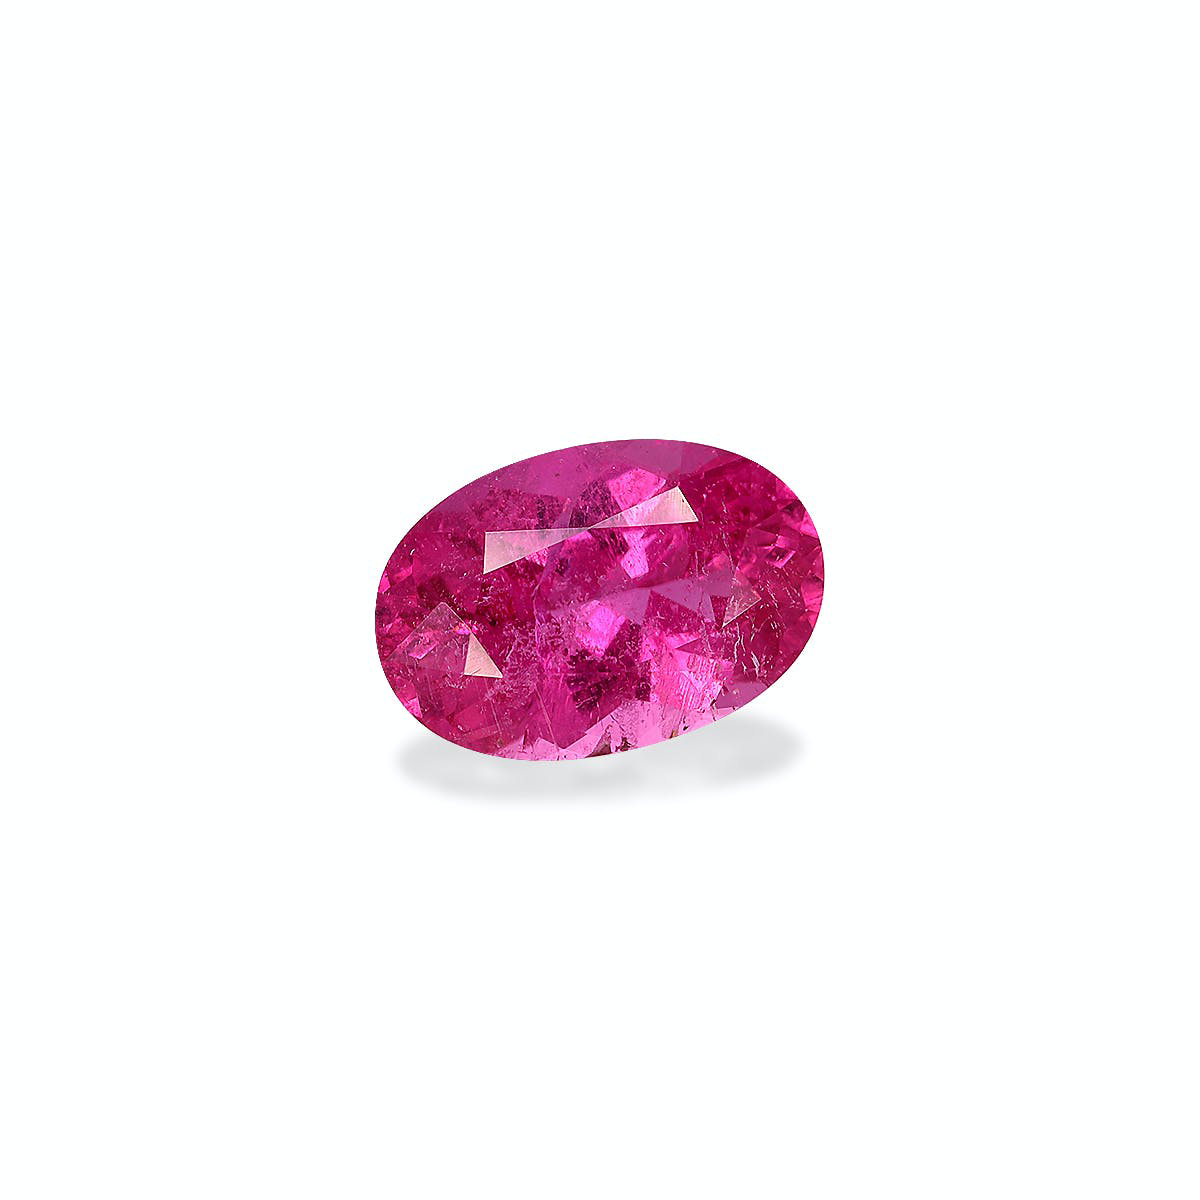 Picture of Vivid Pink Rubellite Tourmaline 2.48ct (RL1141)